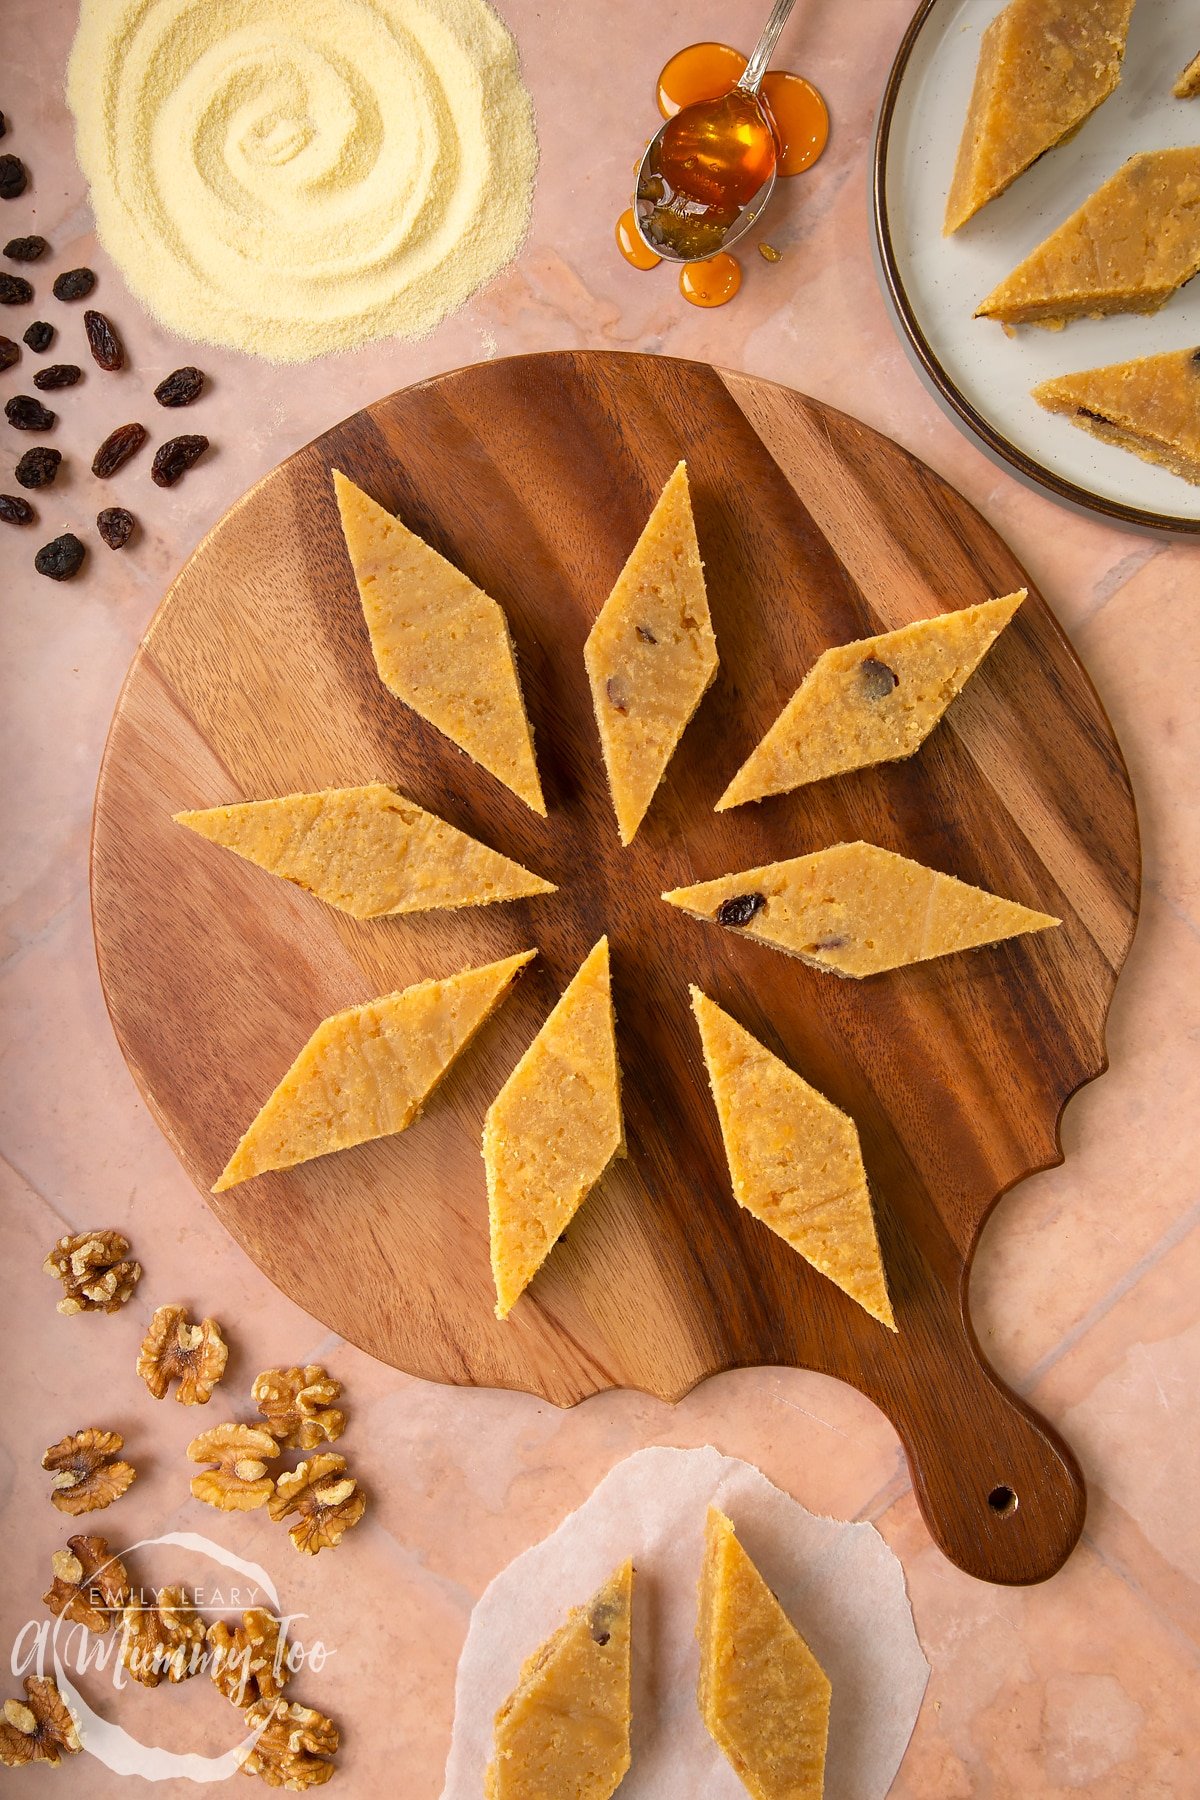 Sanwin-makin (aka golden semolina cake) on a wooden board. Ingredients surround the board.